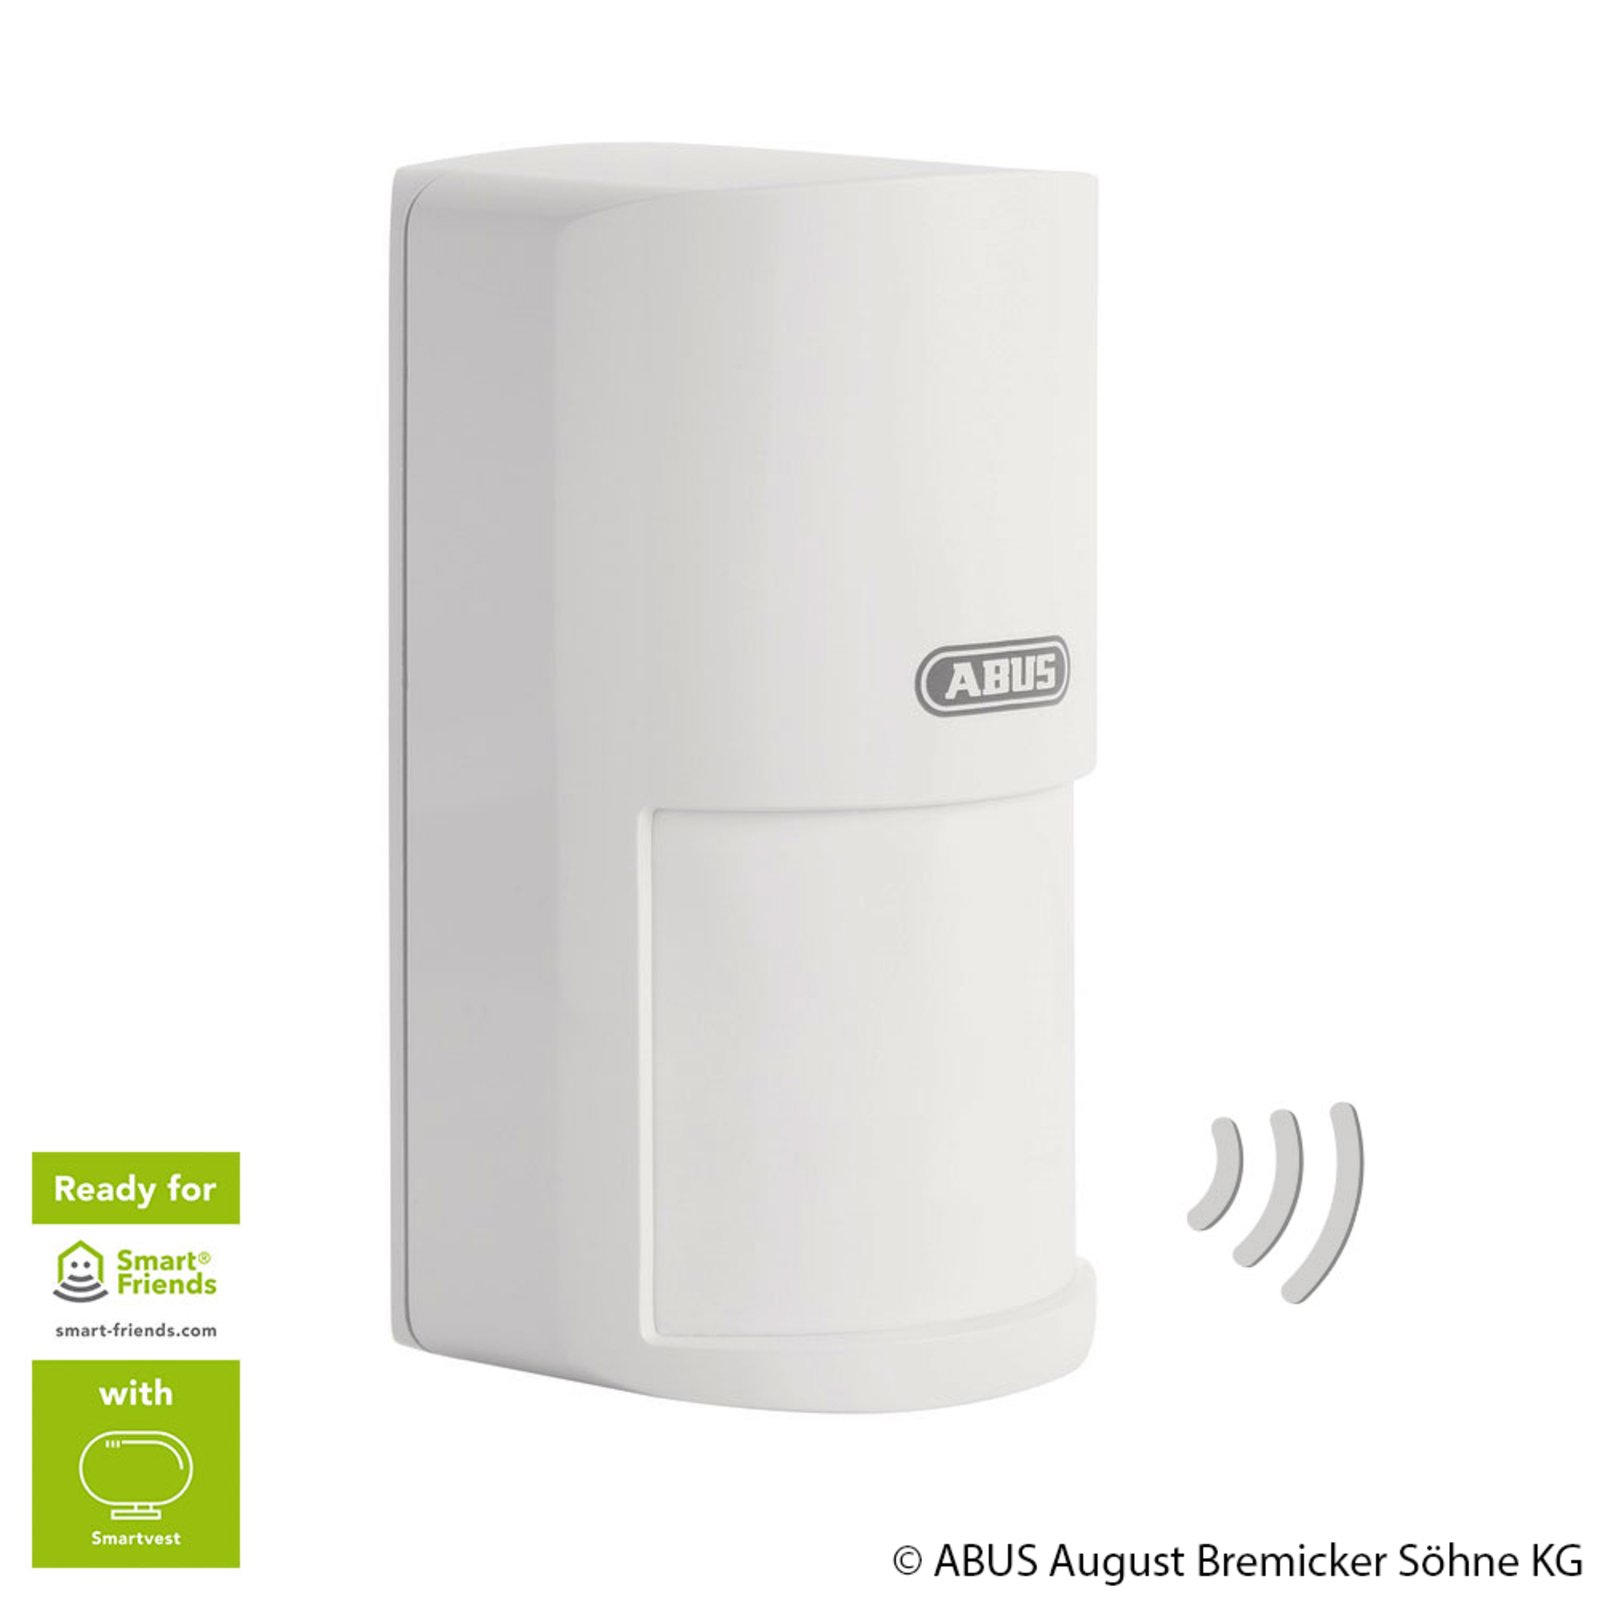 ABUS Smartvest wireless motion detector